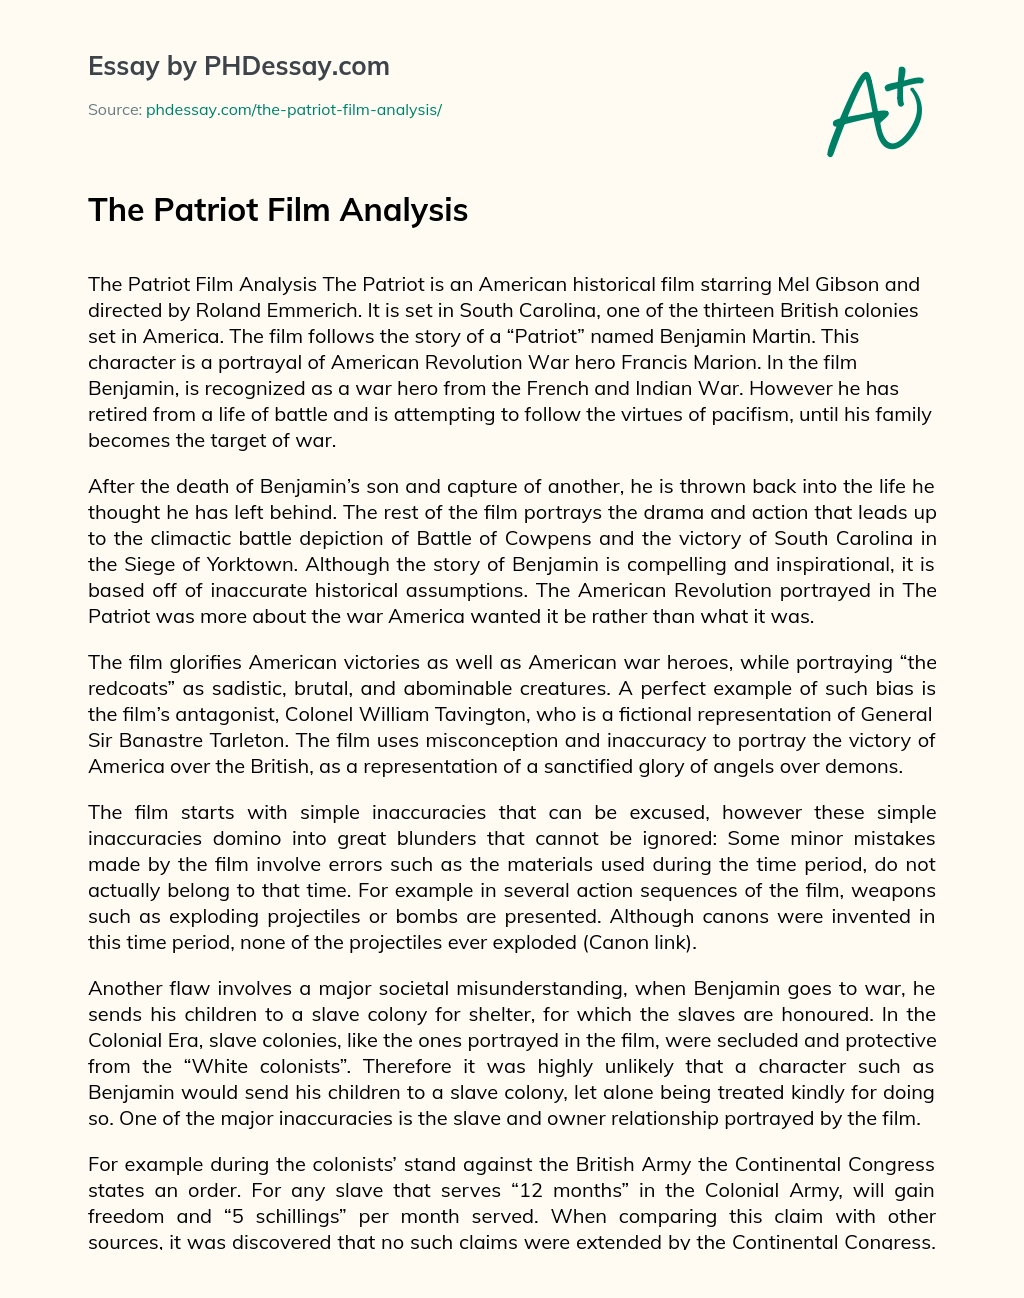 The Patriot Film Analysis essay